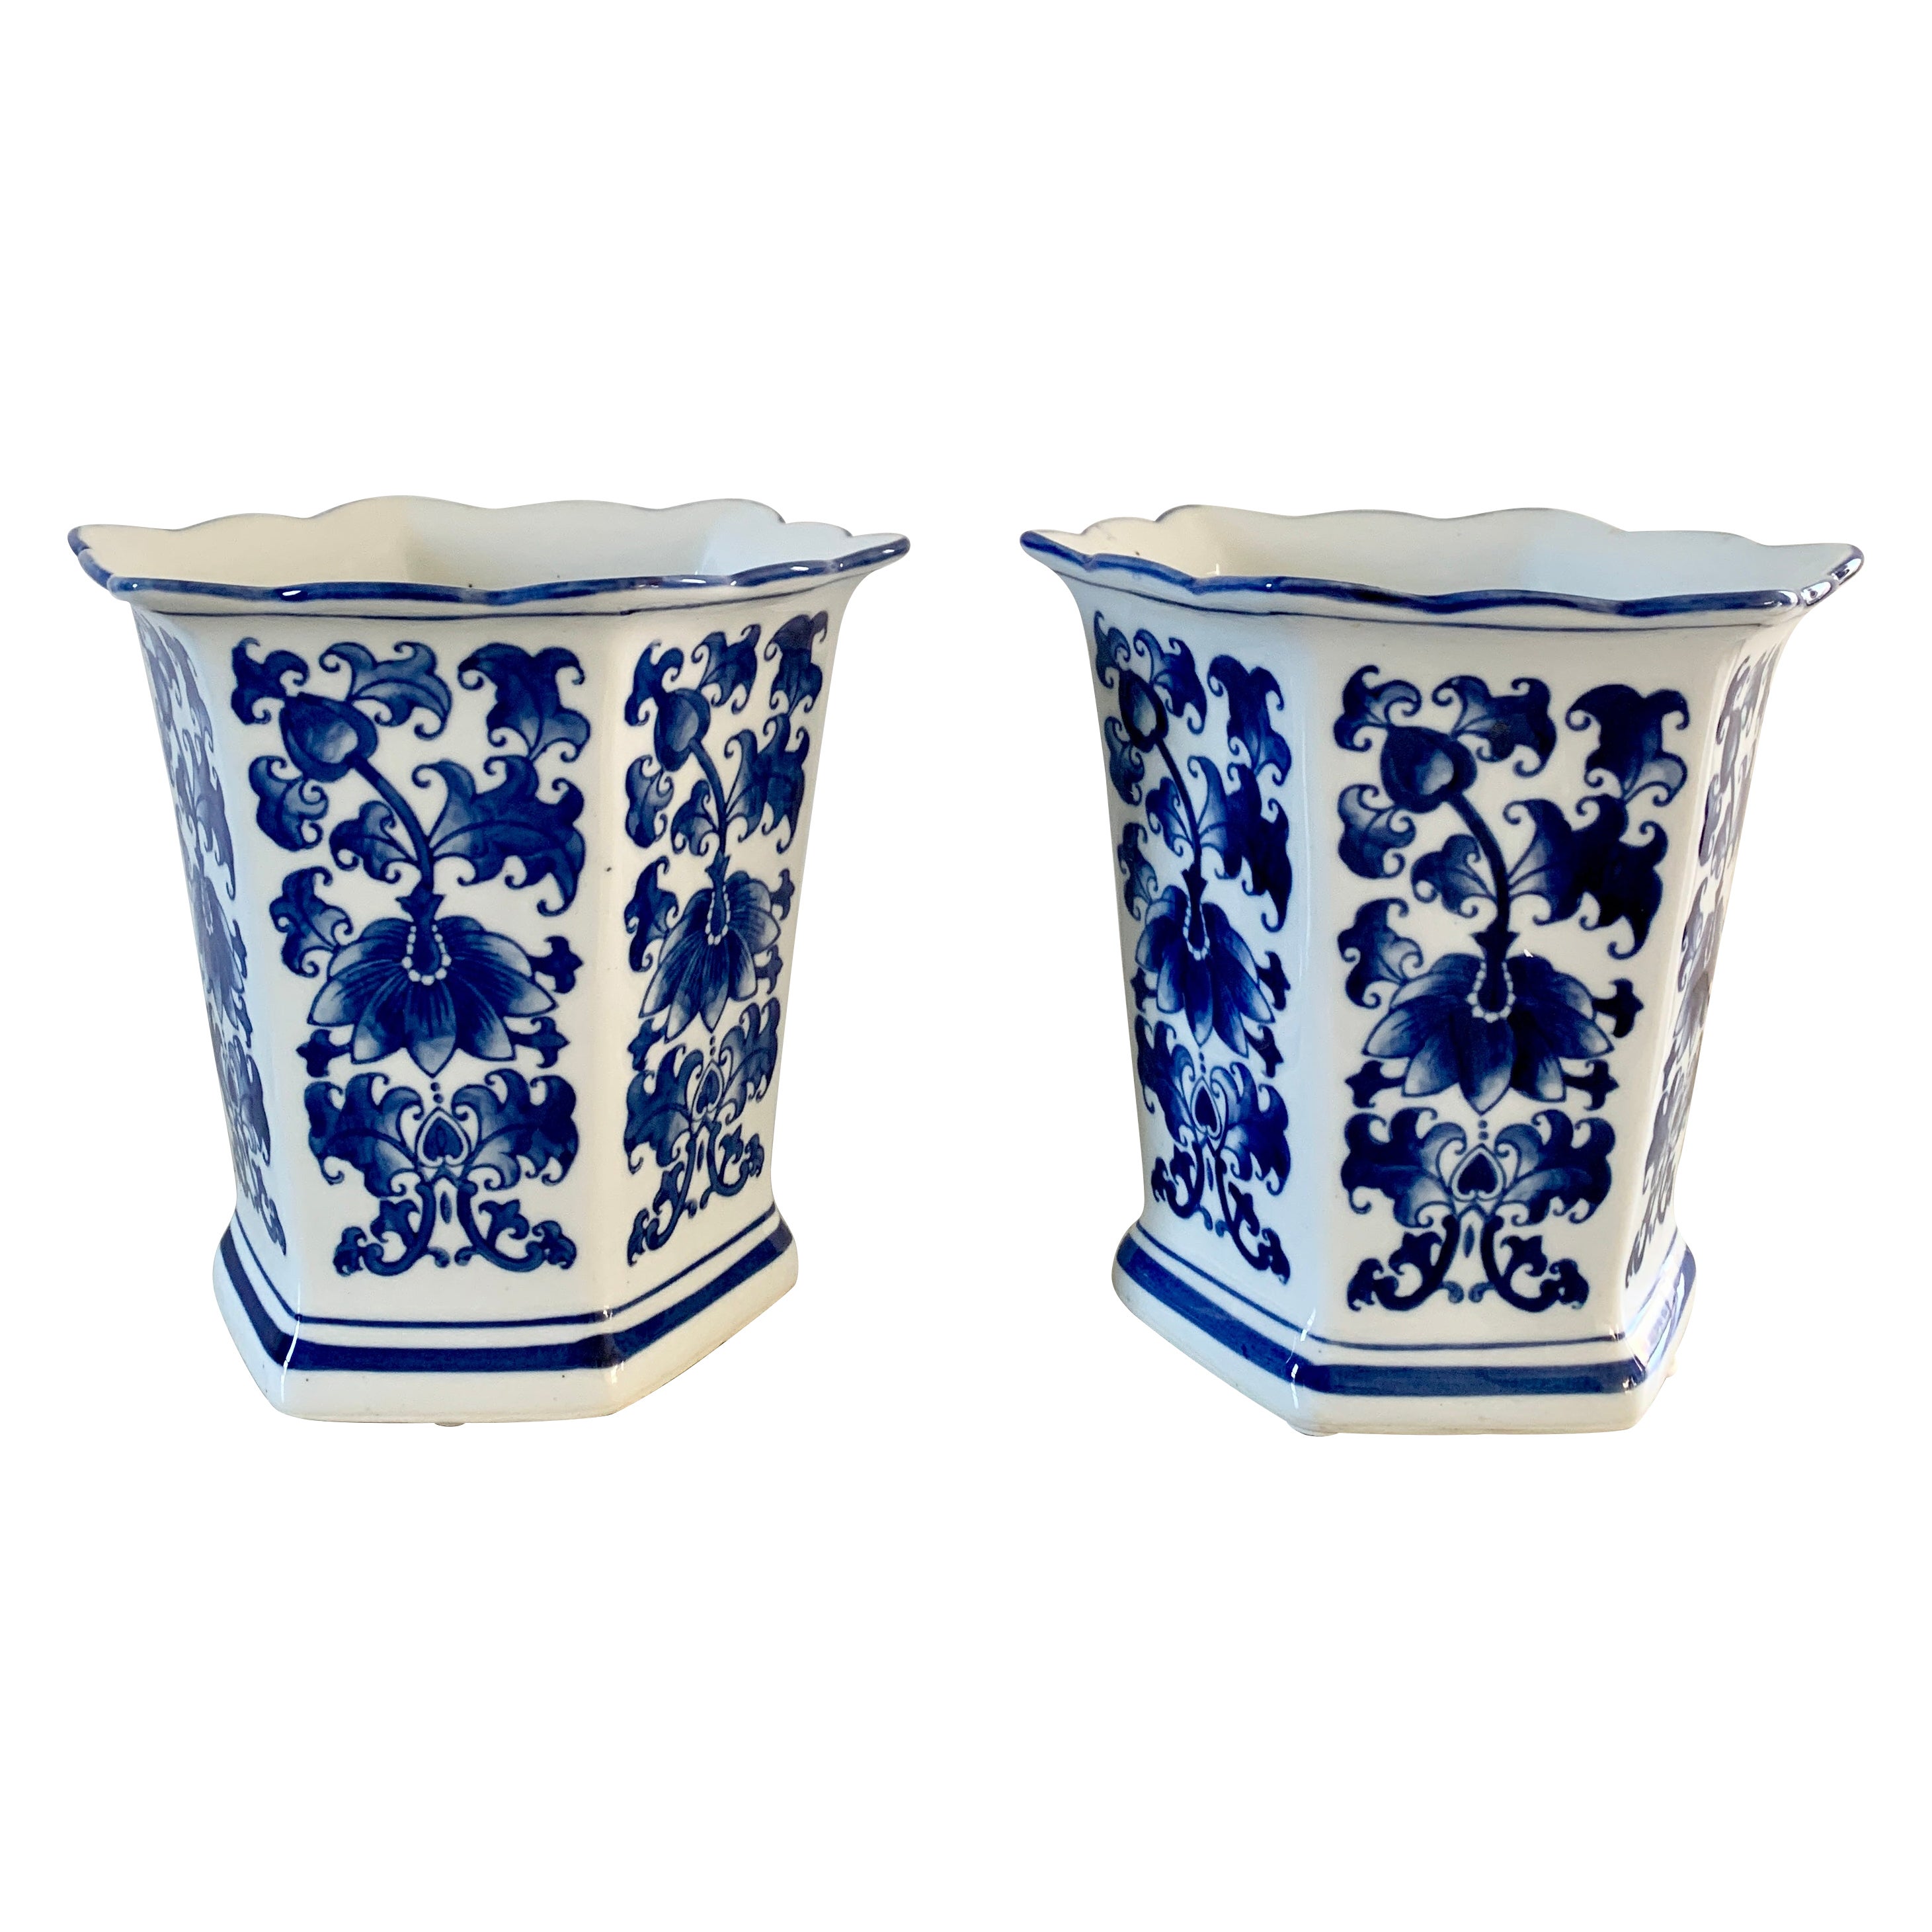 Chinoiserie Blue and White Porcelain Hexagonal Vases, Pair For Sale